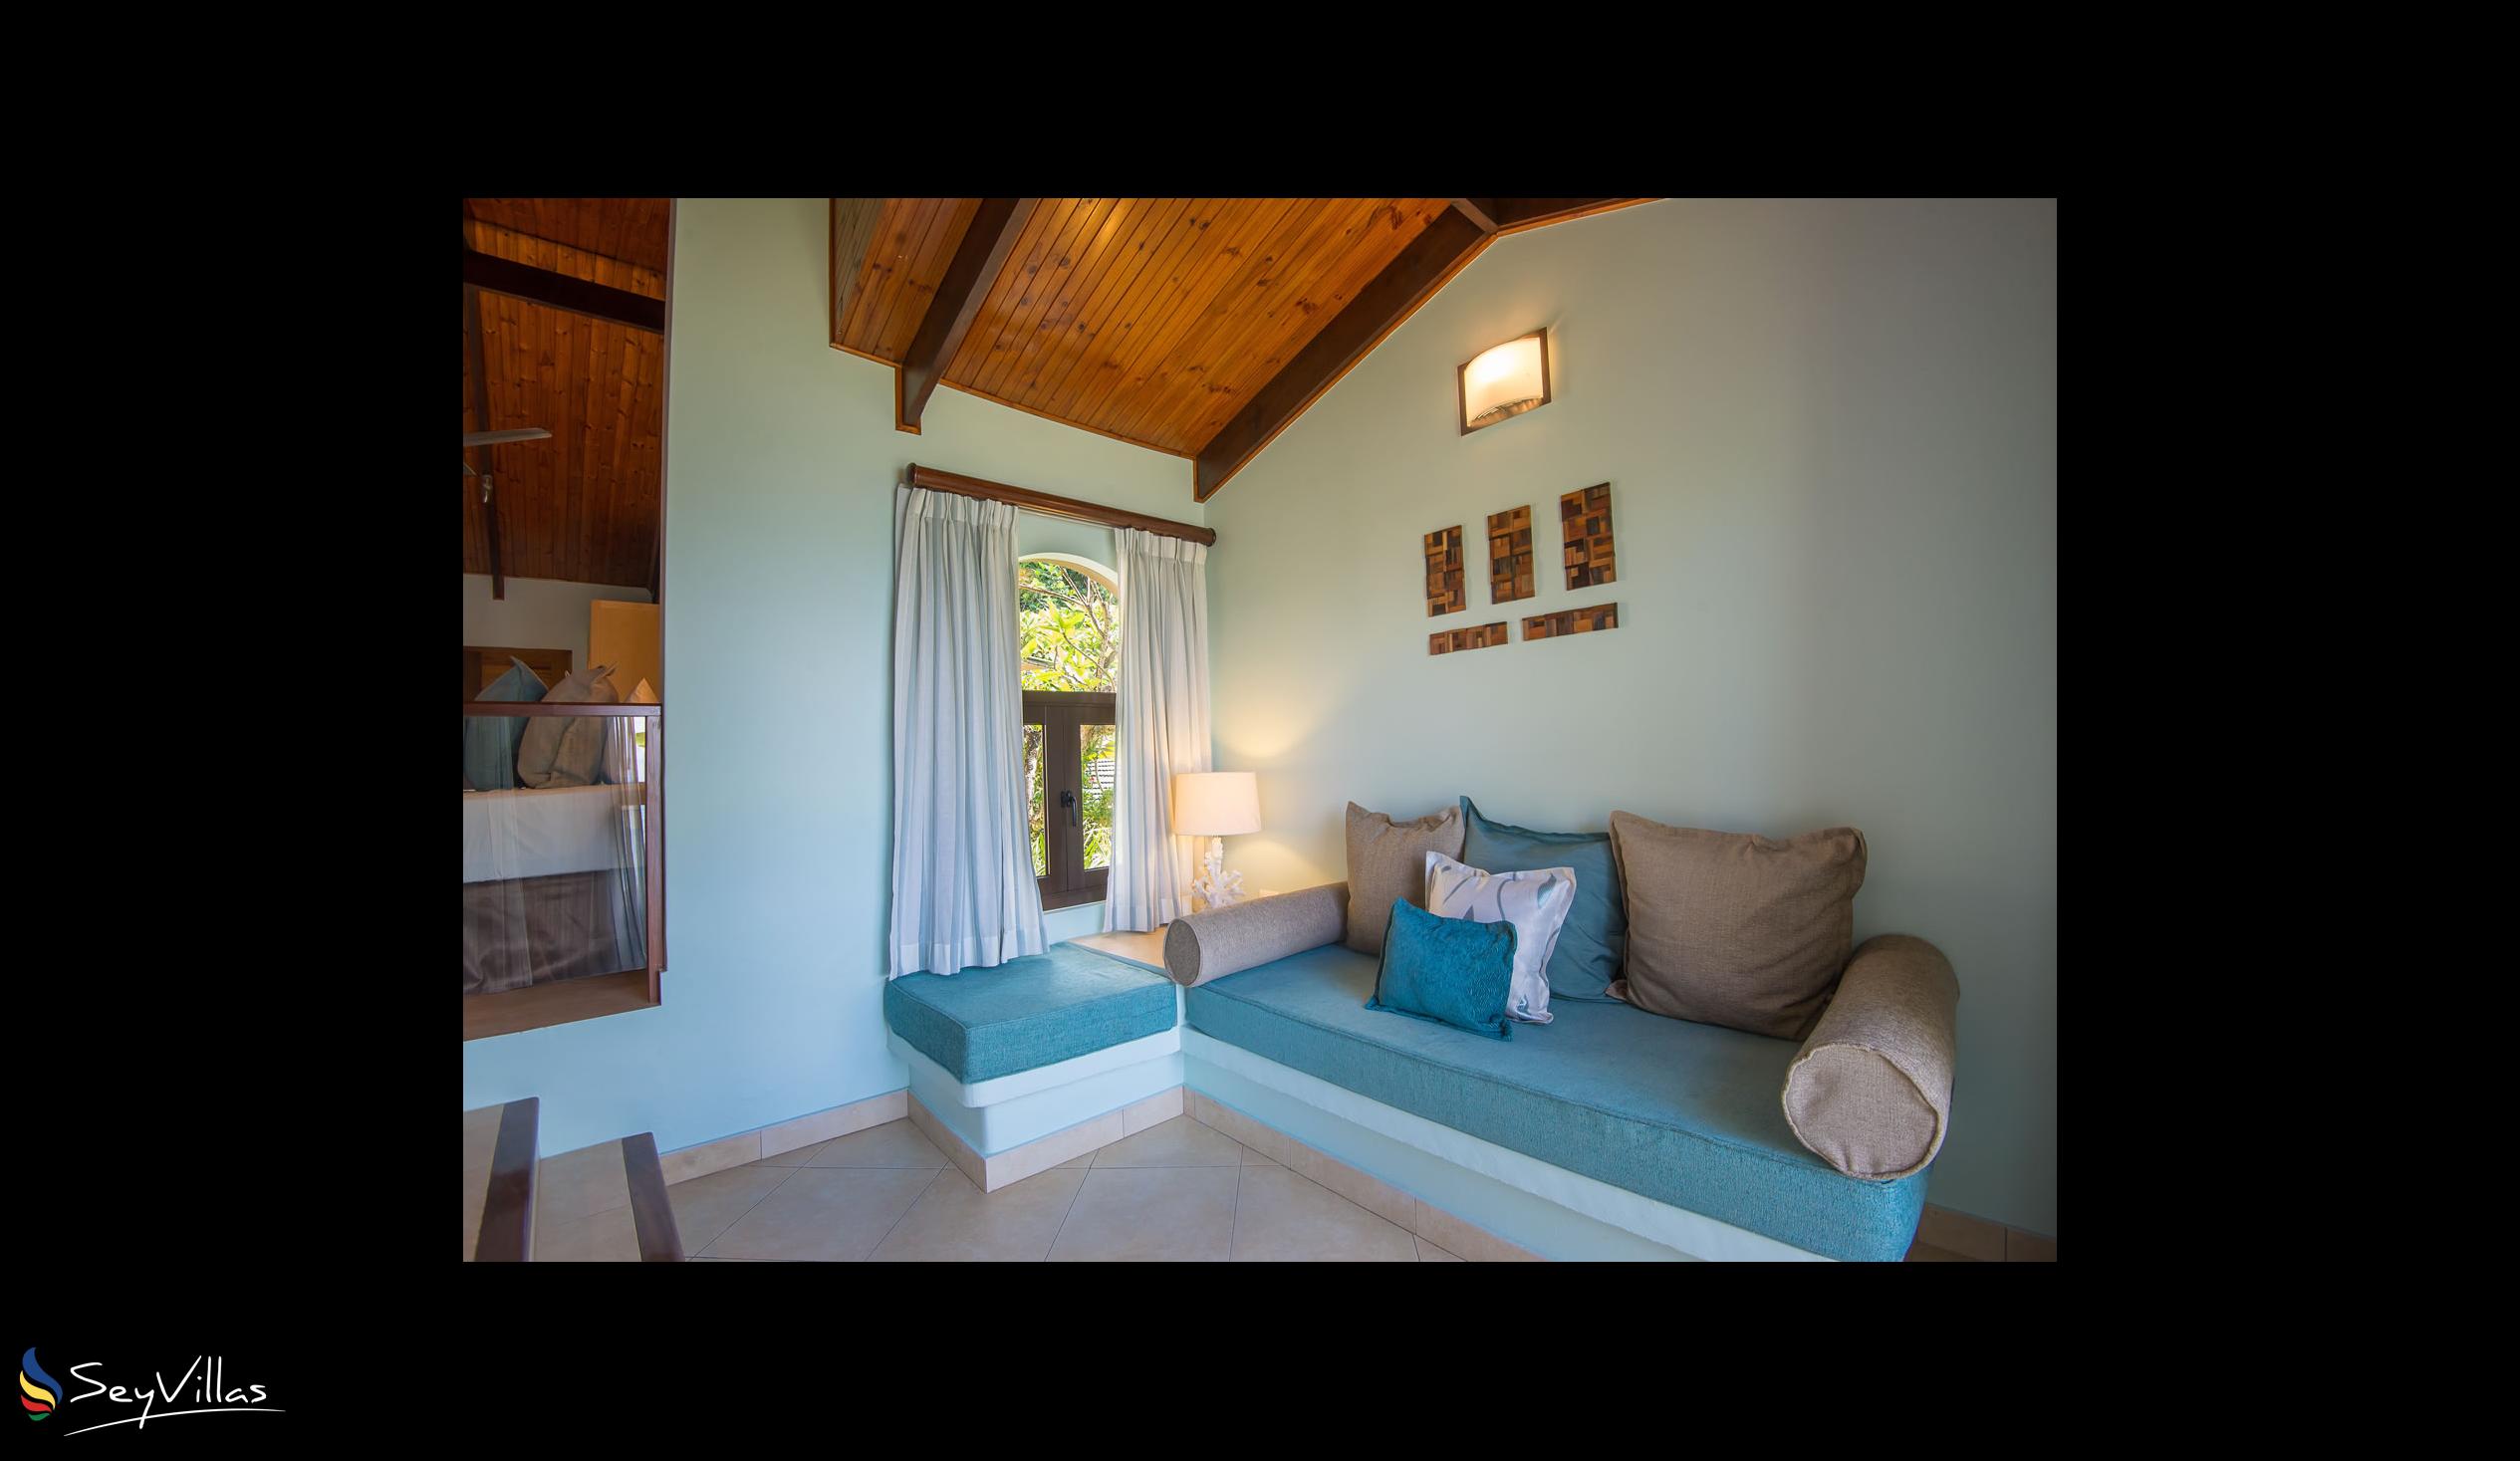 Foto 58: Coco de Mer & Black Parrot Suites - Standard - Praslin (Seychelles)